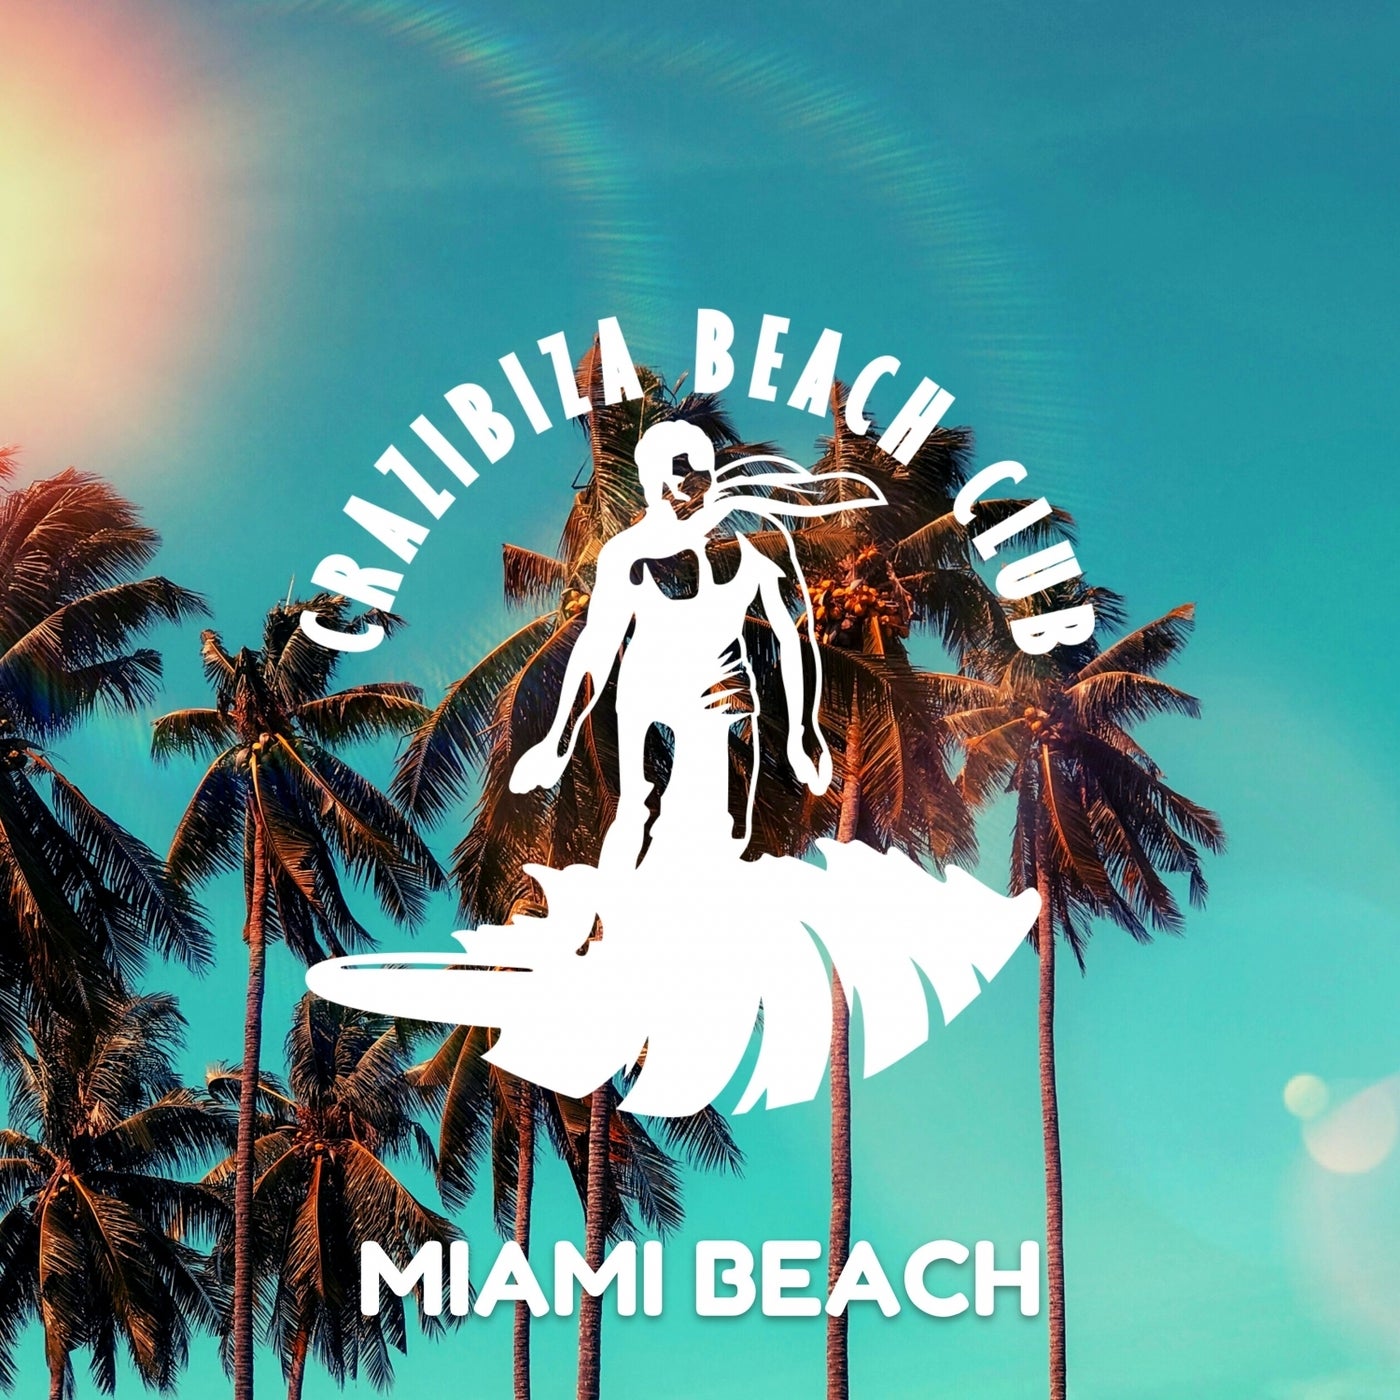 Crazibiza Beach Club Miami Beach